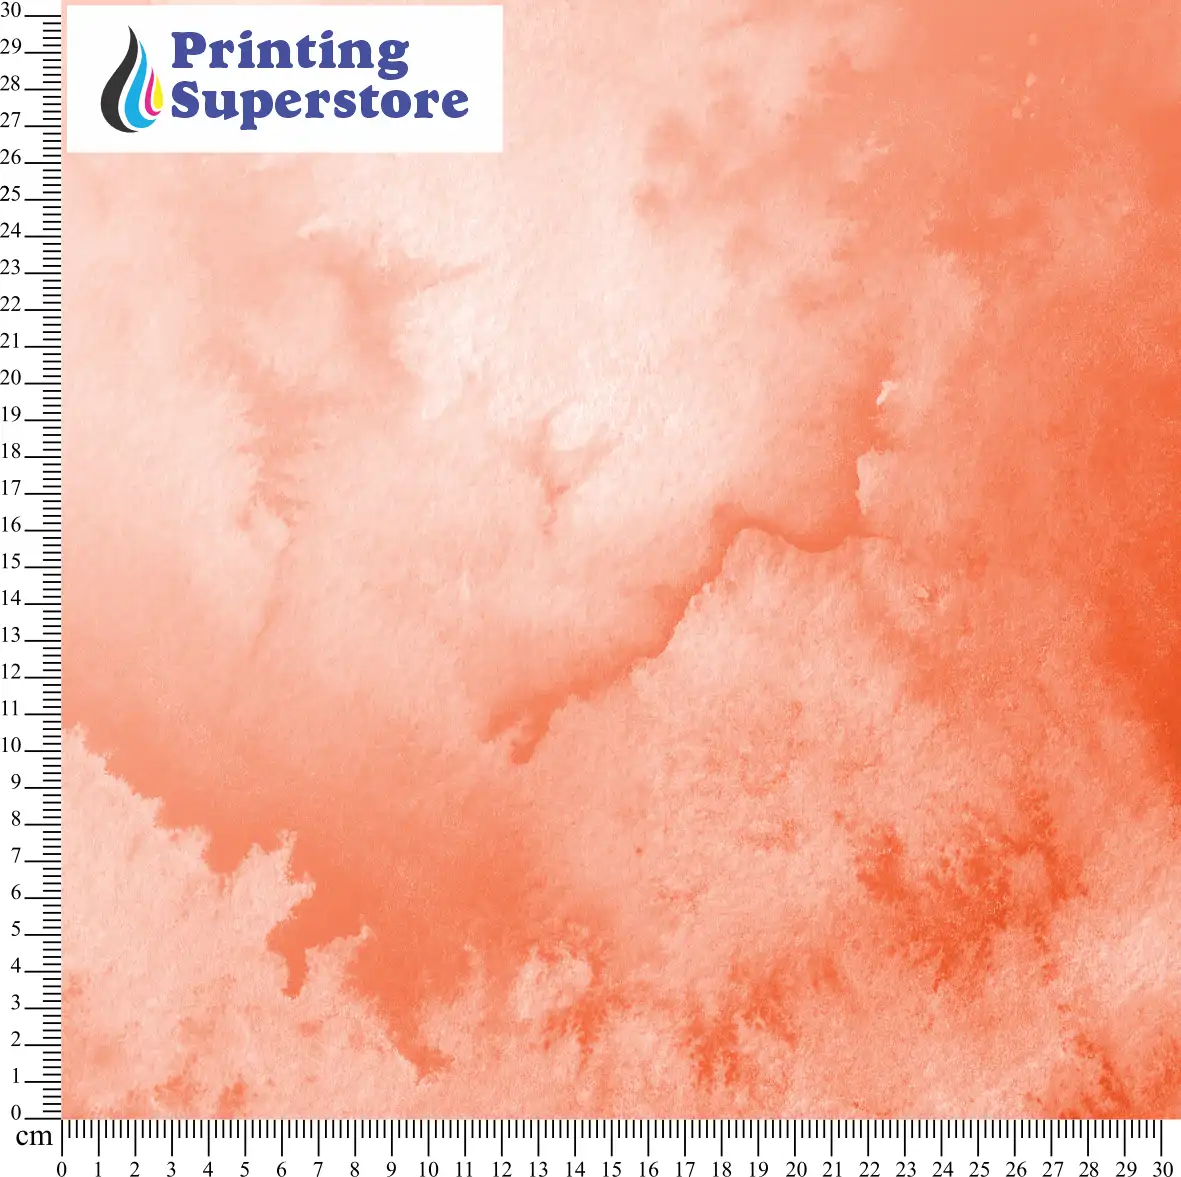 Orange Watercolour theme pattern printed on Self Adhesive Vinyl (SAV), Heat Transfer Vinyl (HTV) and Cardstock.